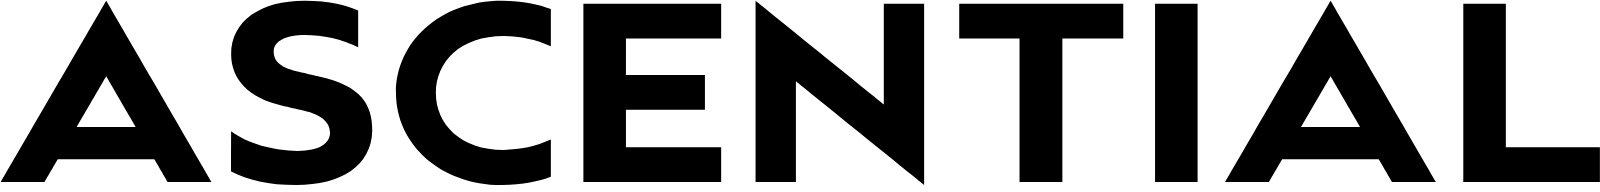 Ascential logo large (transparent PNG)